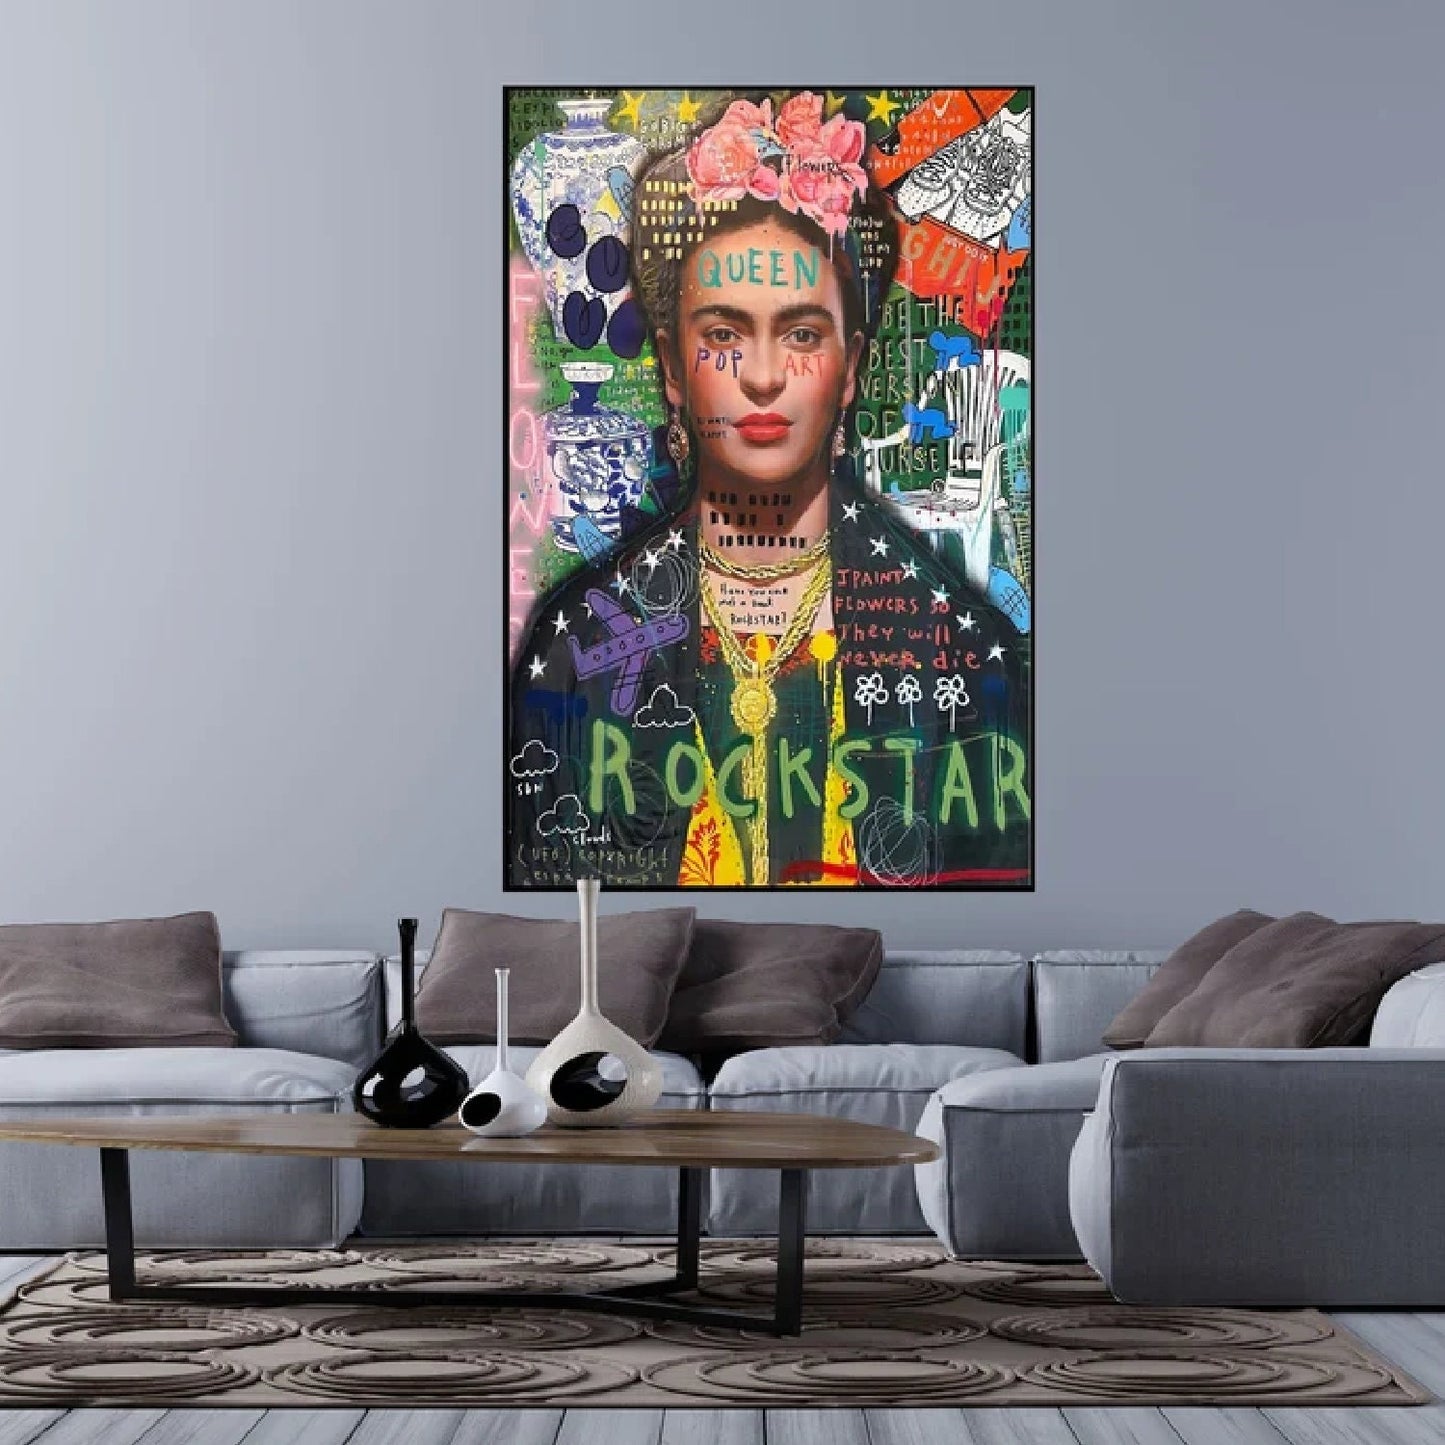 Rockstar Frida Kahlo Hand Painted Pop Art Painting